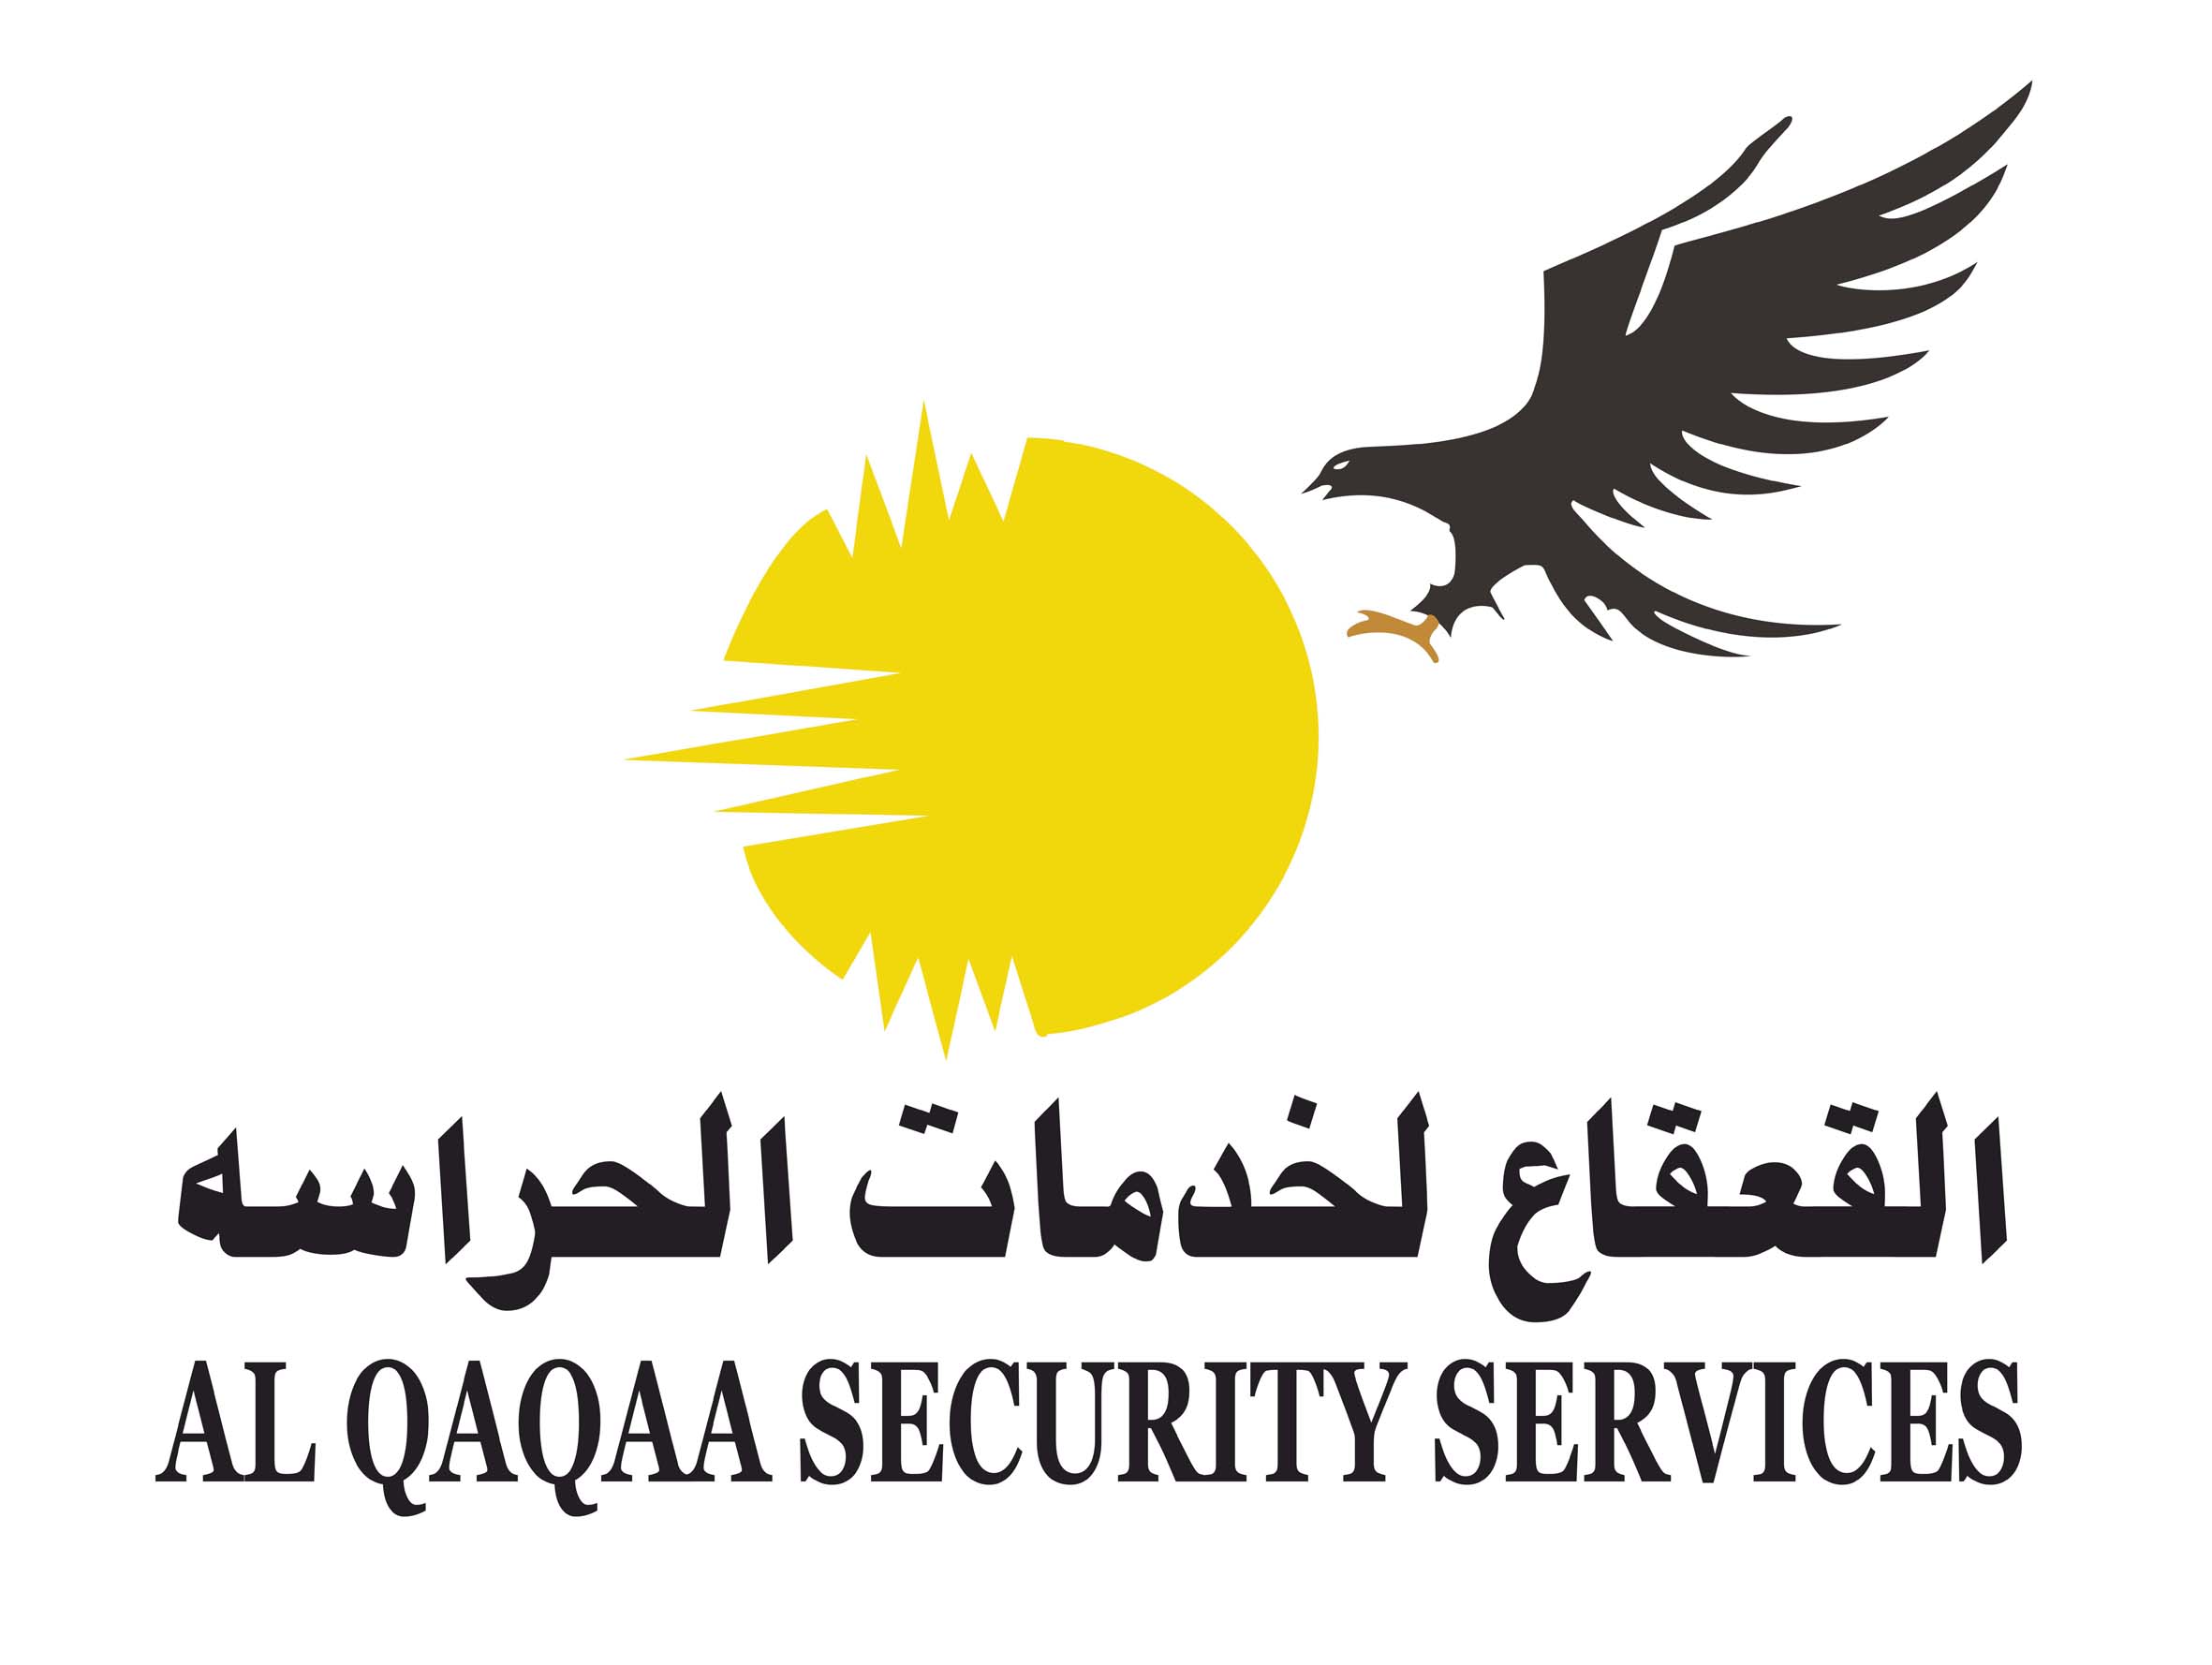 Al Qaqaa security Services llc